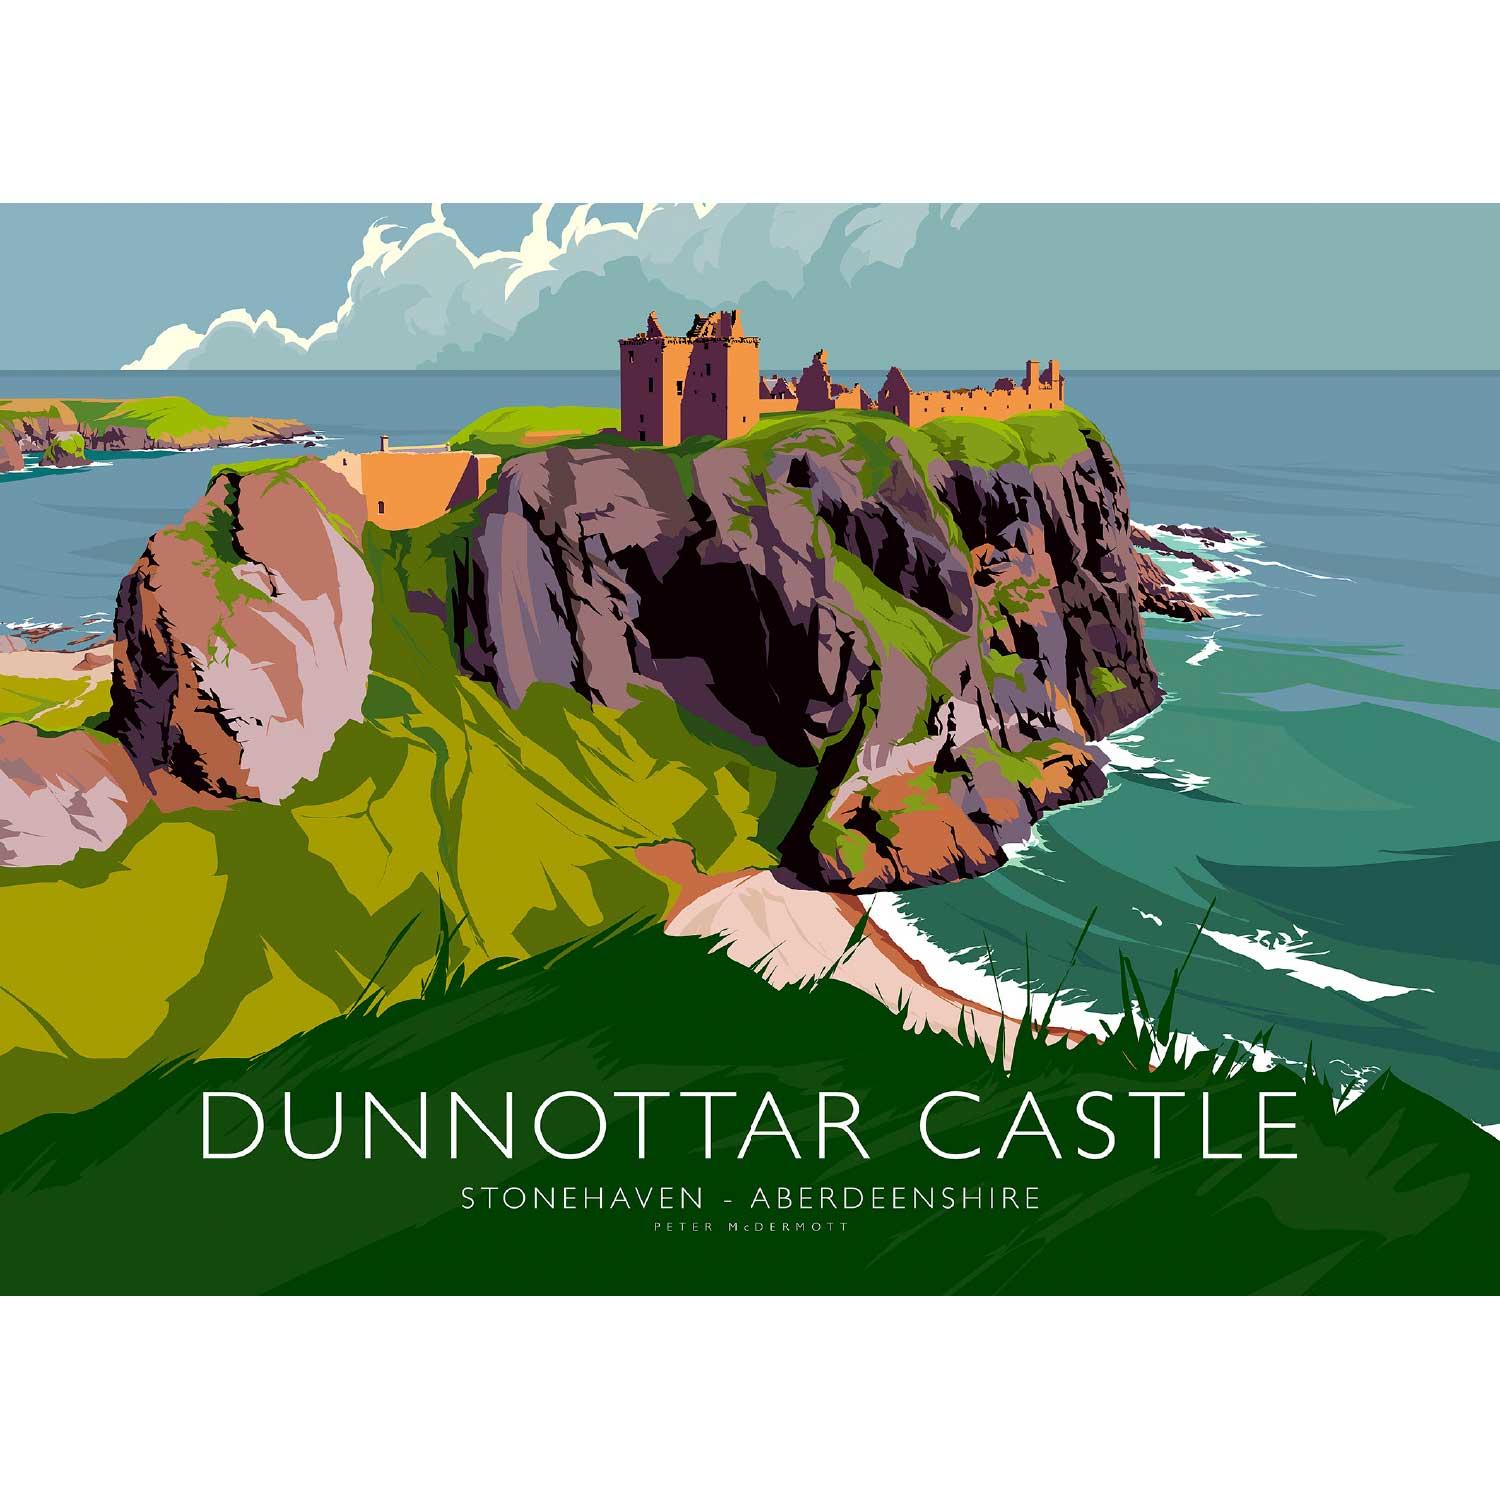 Dunnottar Castle by Peter McDermott